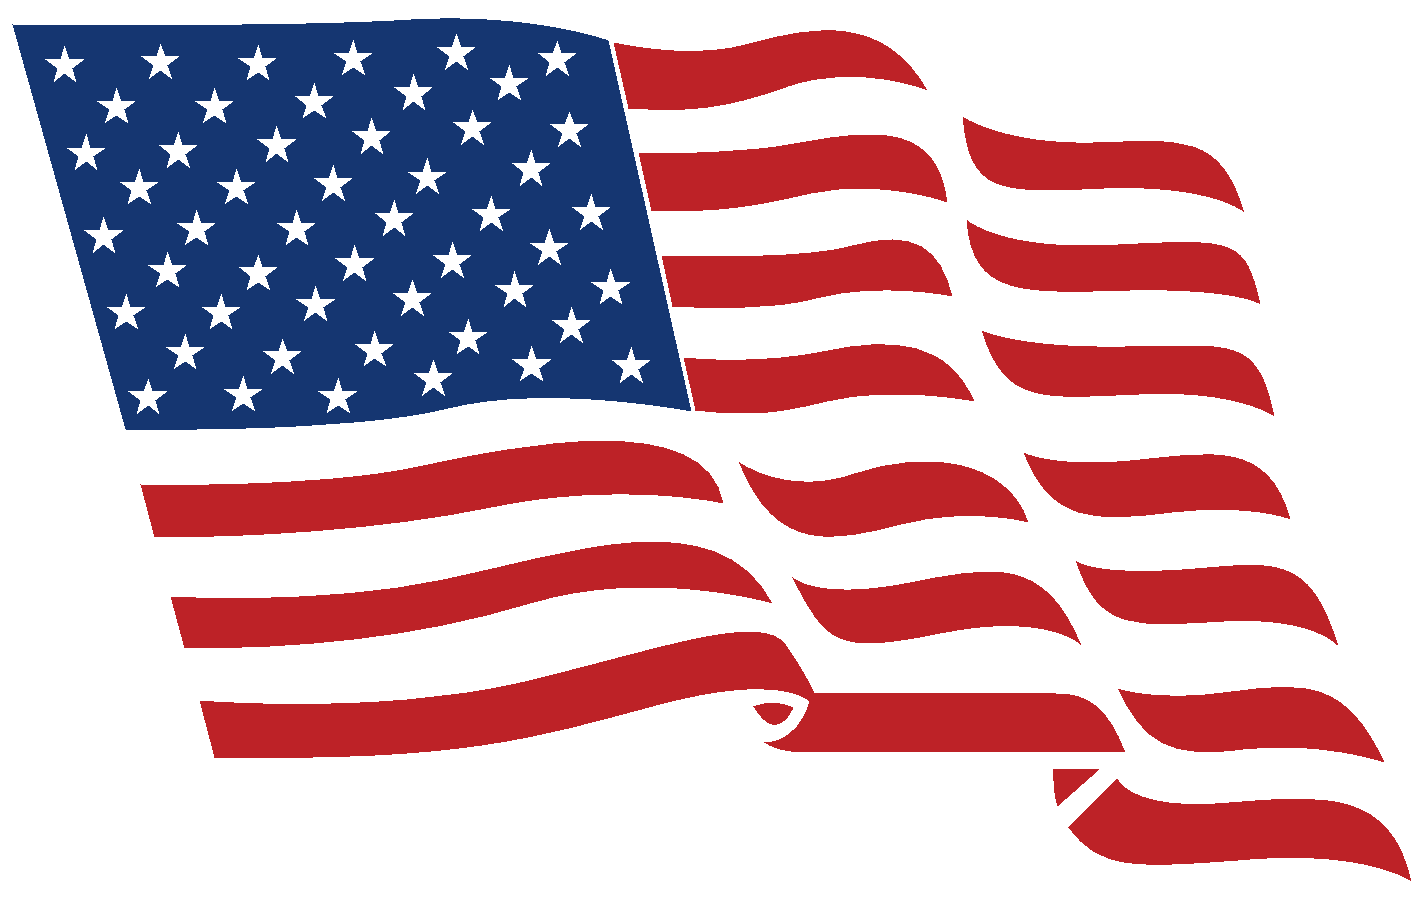 free vector clip art american flag - photo #41